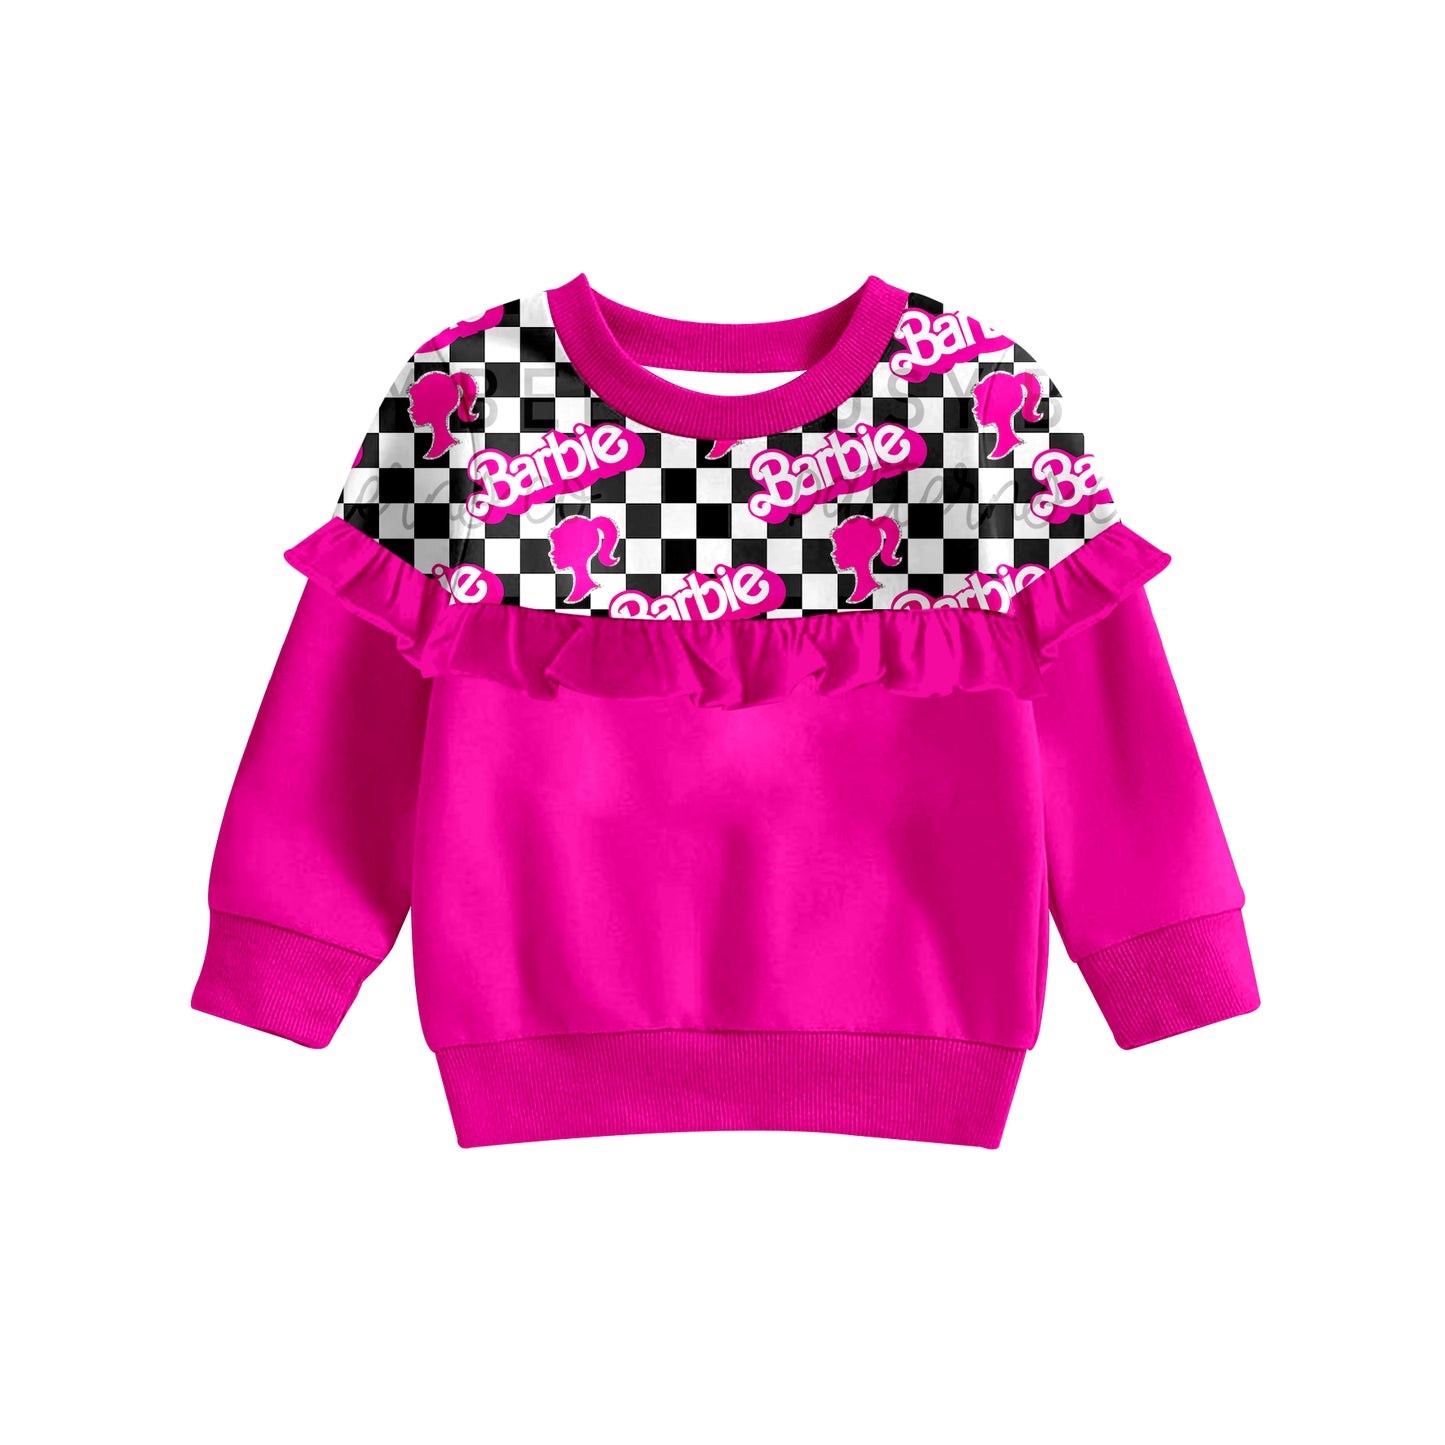 Hot pink plaid ruffle party girls shirt